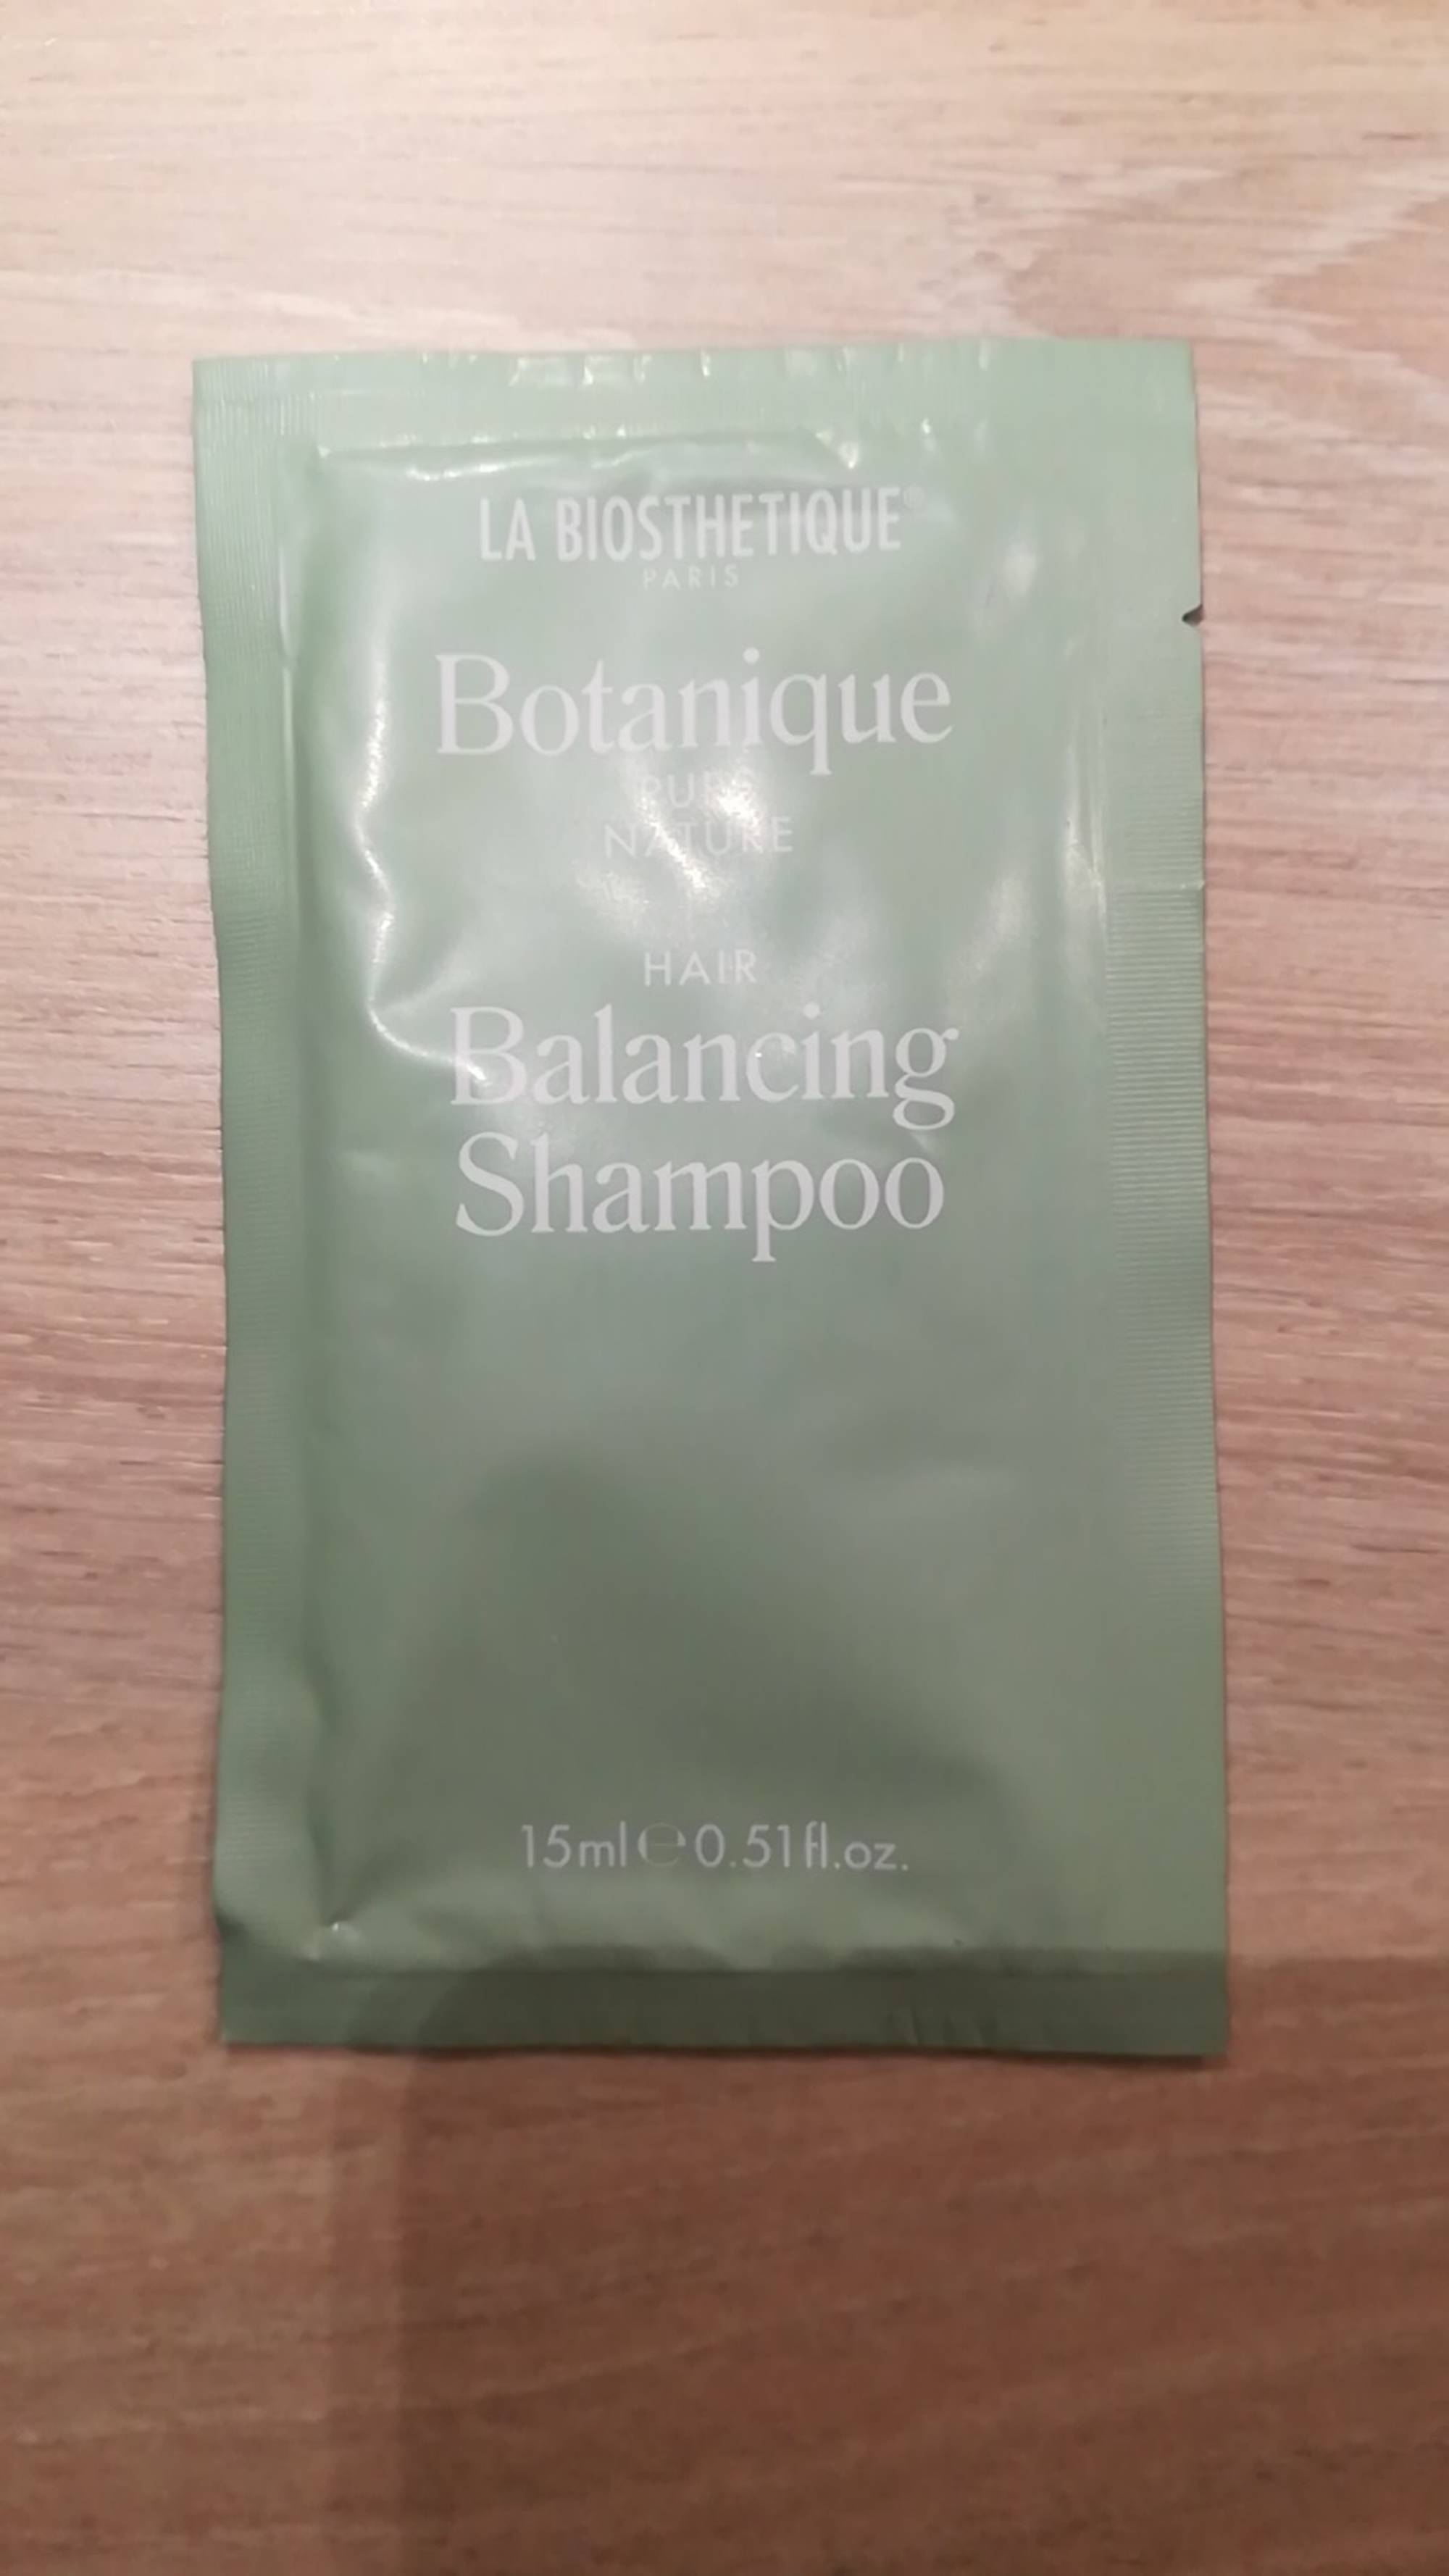 LA BIOSTHETIQUE - Botanique - Hair Balancing shampoo